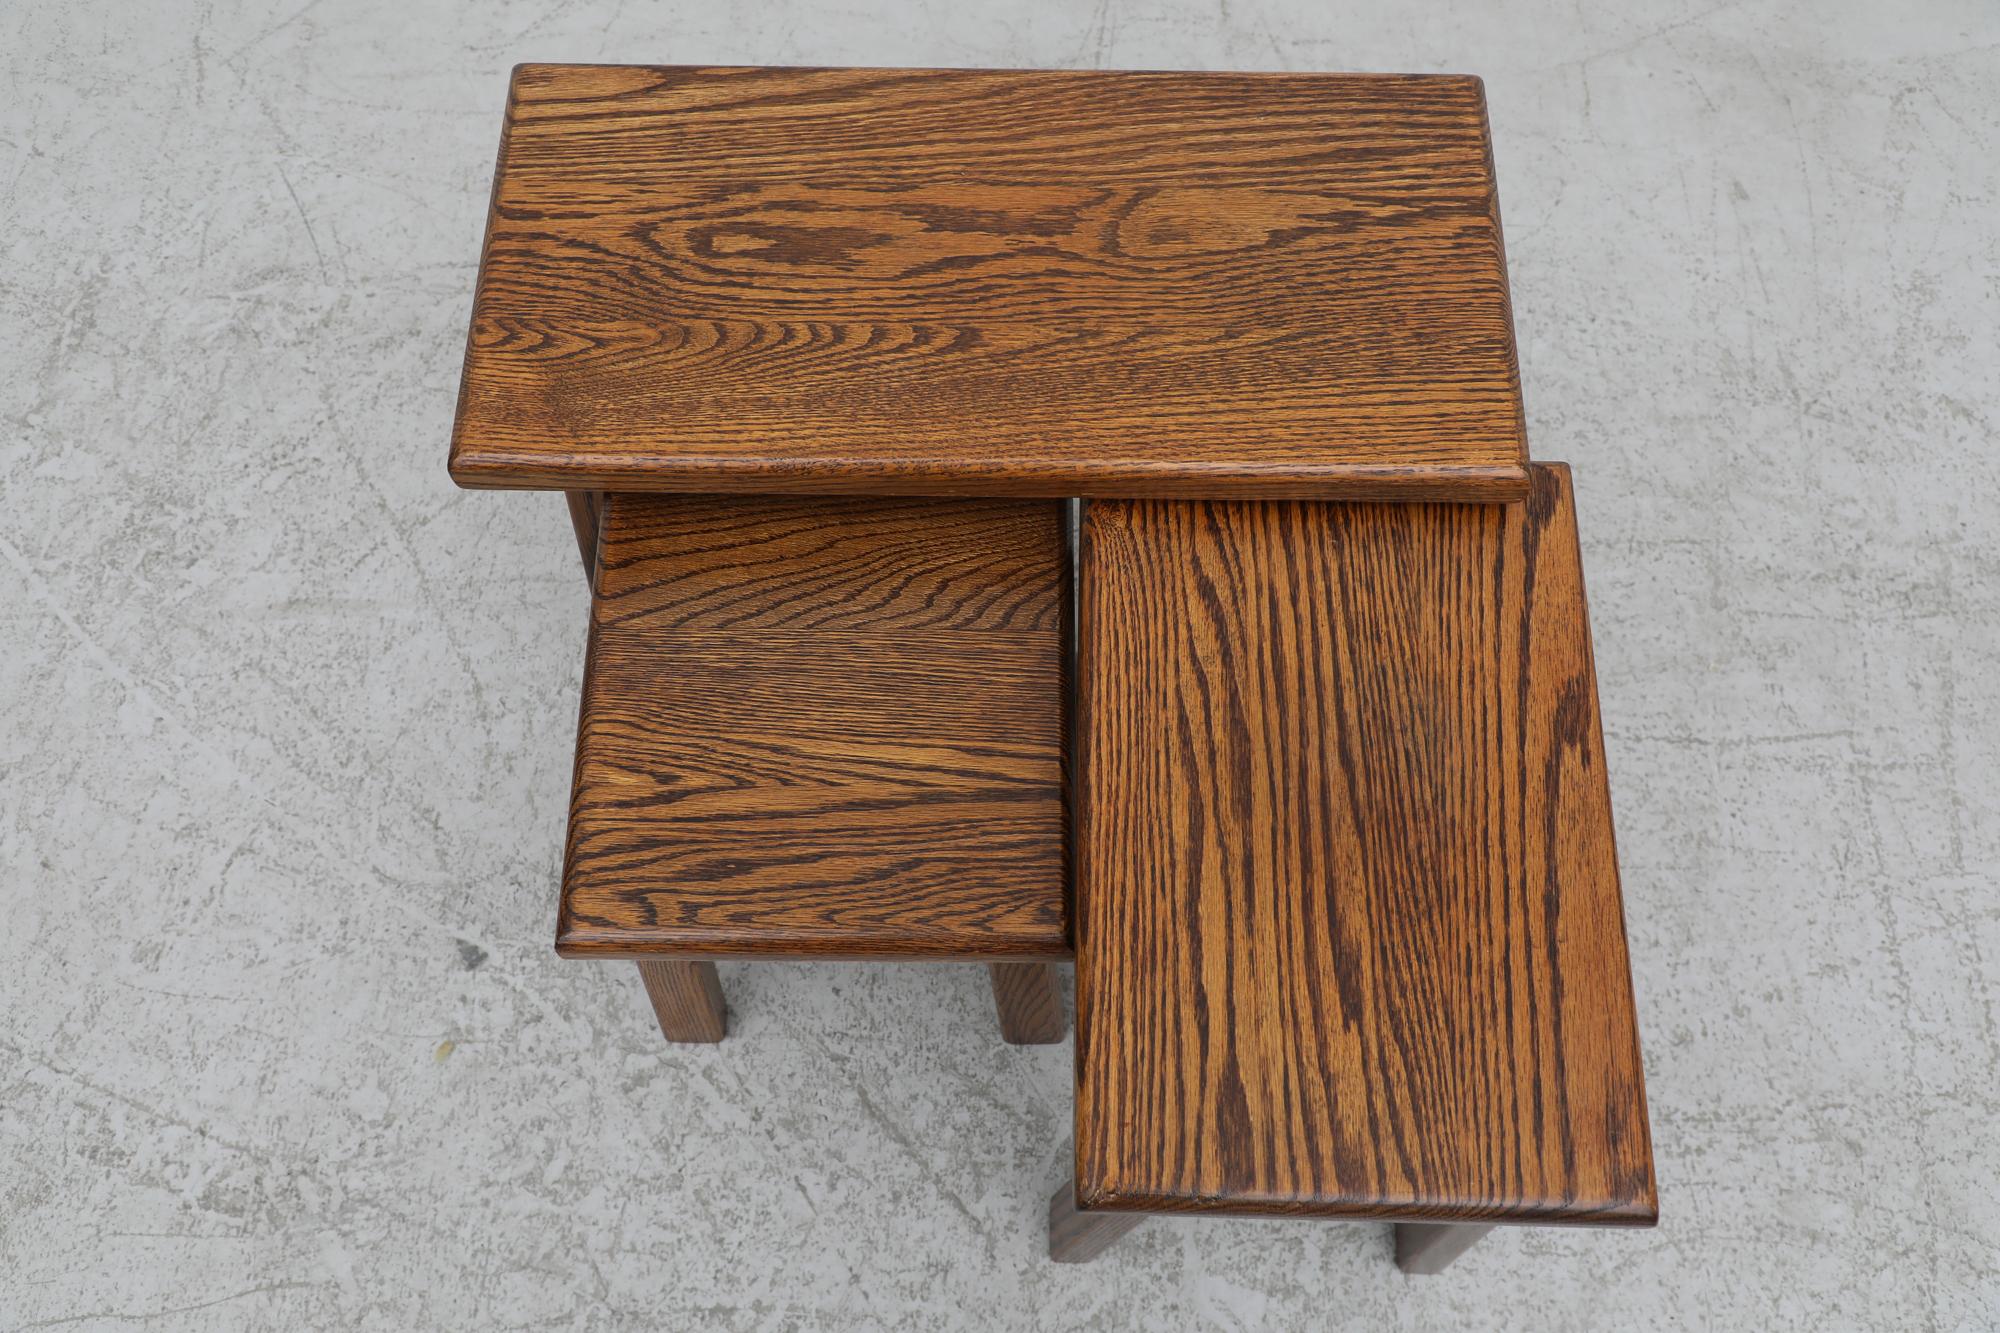 Pierre Chapo Inspired Brutalist Dark Oak Nesting Tables with Tiger Grain For Sale 1